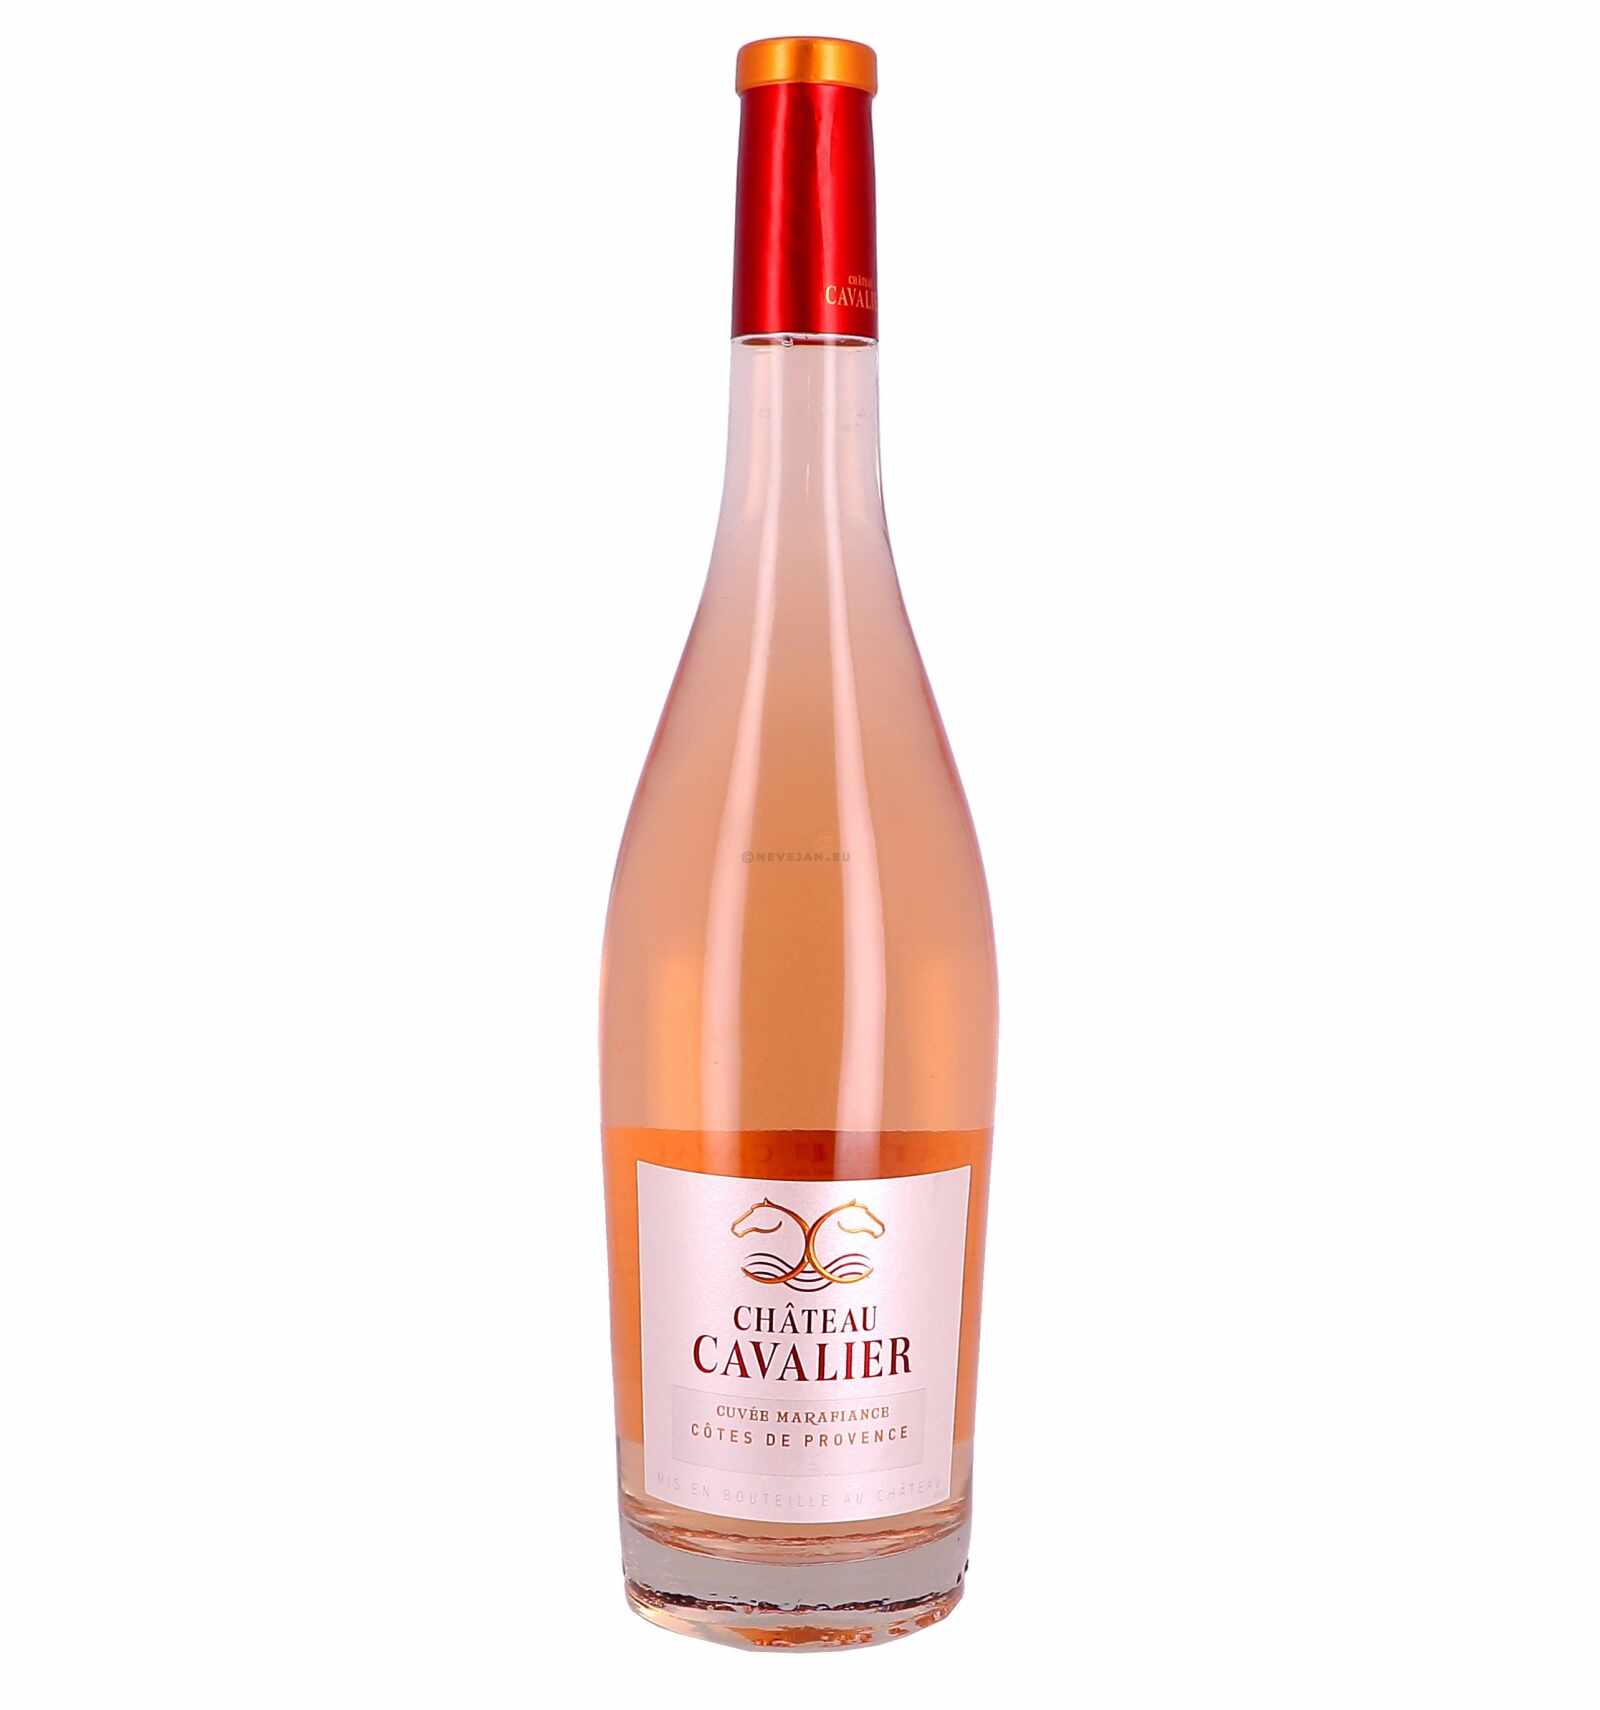 Vin roze sec, Chateau Cavalier CuvÃ©e Marafiance, CÃ´tes de Provence, 12.5% alc., 1.5L, Franta